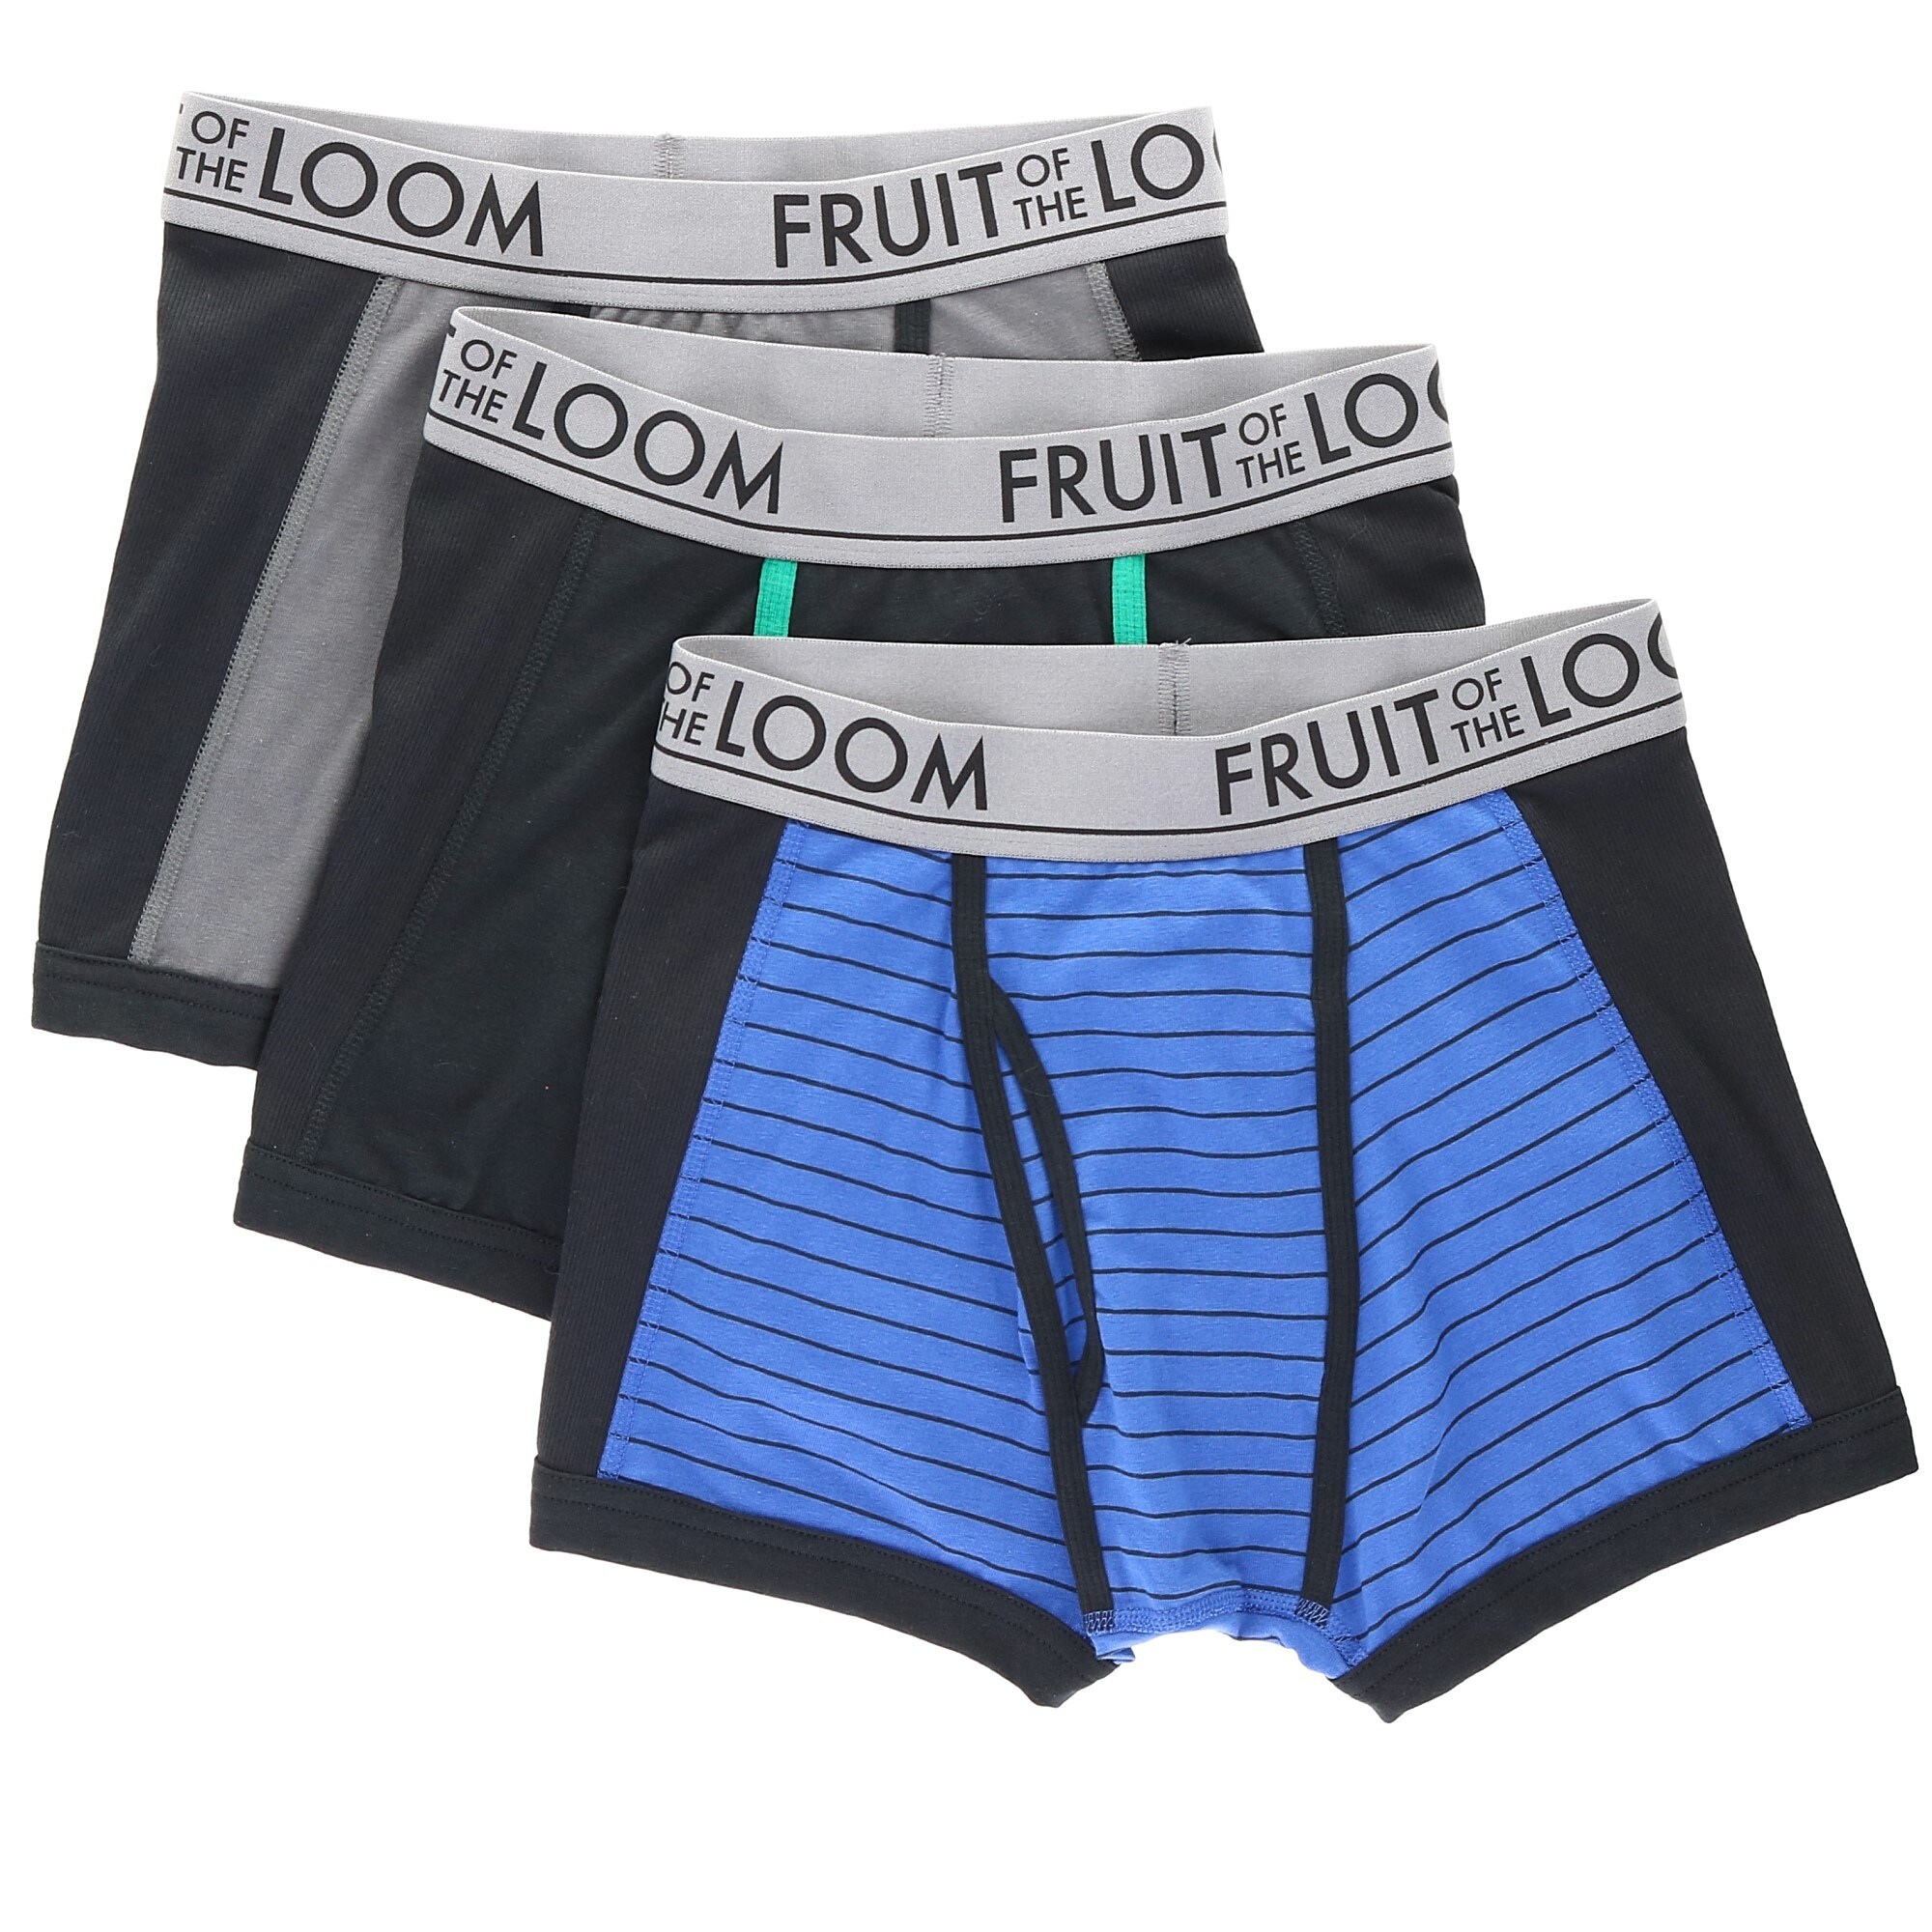 Fruit of the loom - mens high fasion bikini briefs